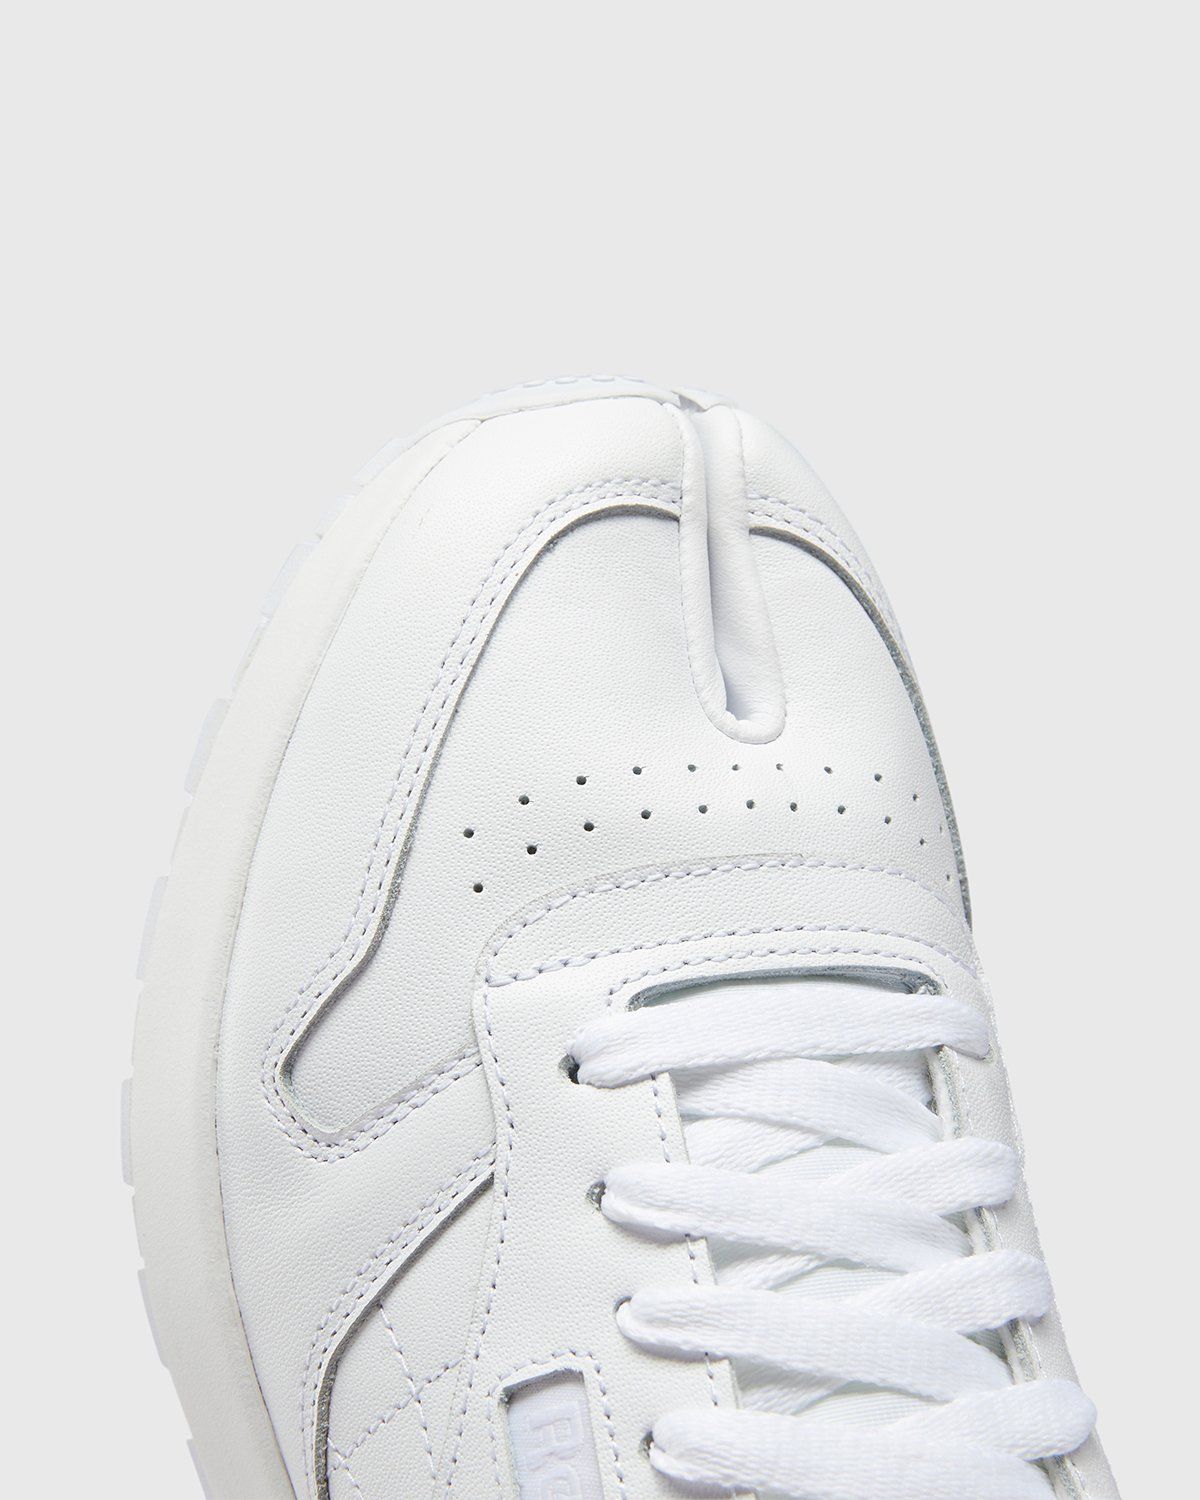 Maison Margiela x Reebok – Classic Leather Tabi White - Sneakers - White - Image 4